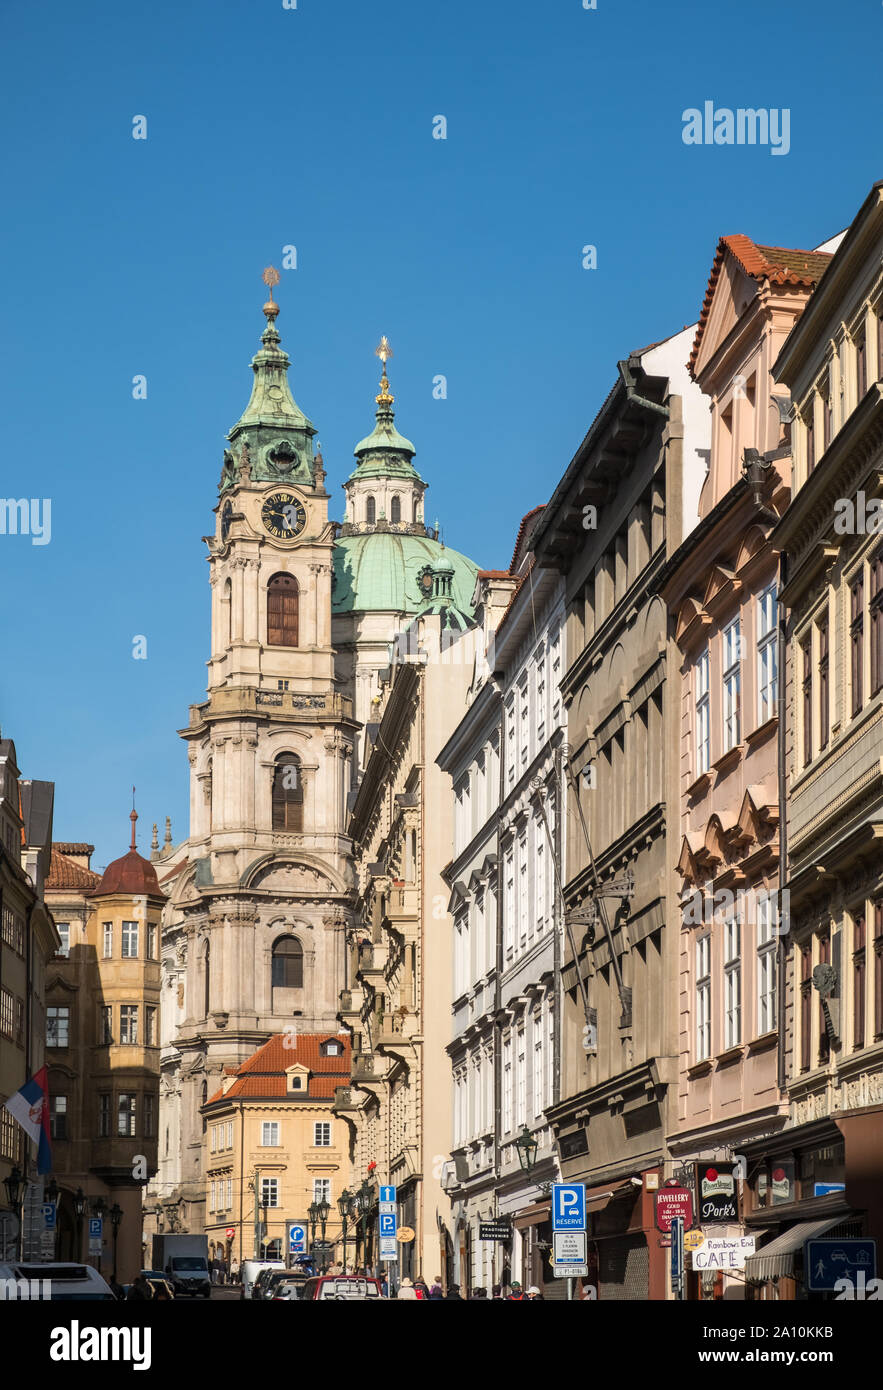 Prague architecture, including dome and tower of St Nicholas Church, Mala Strana, Prague, Czech Republic. Stock Photo